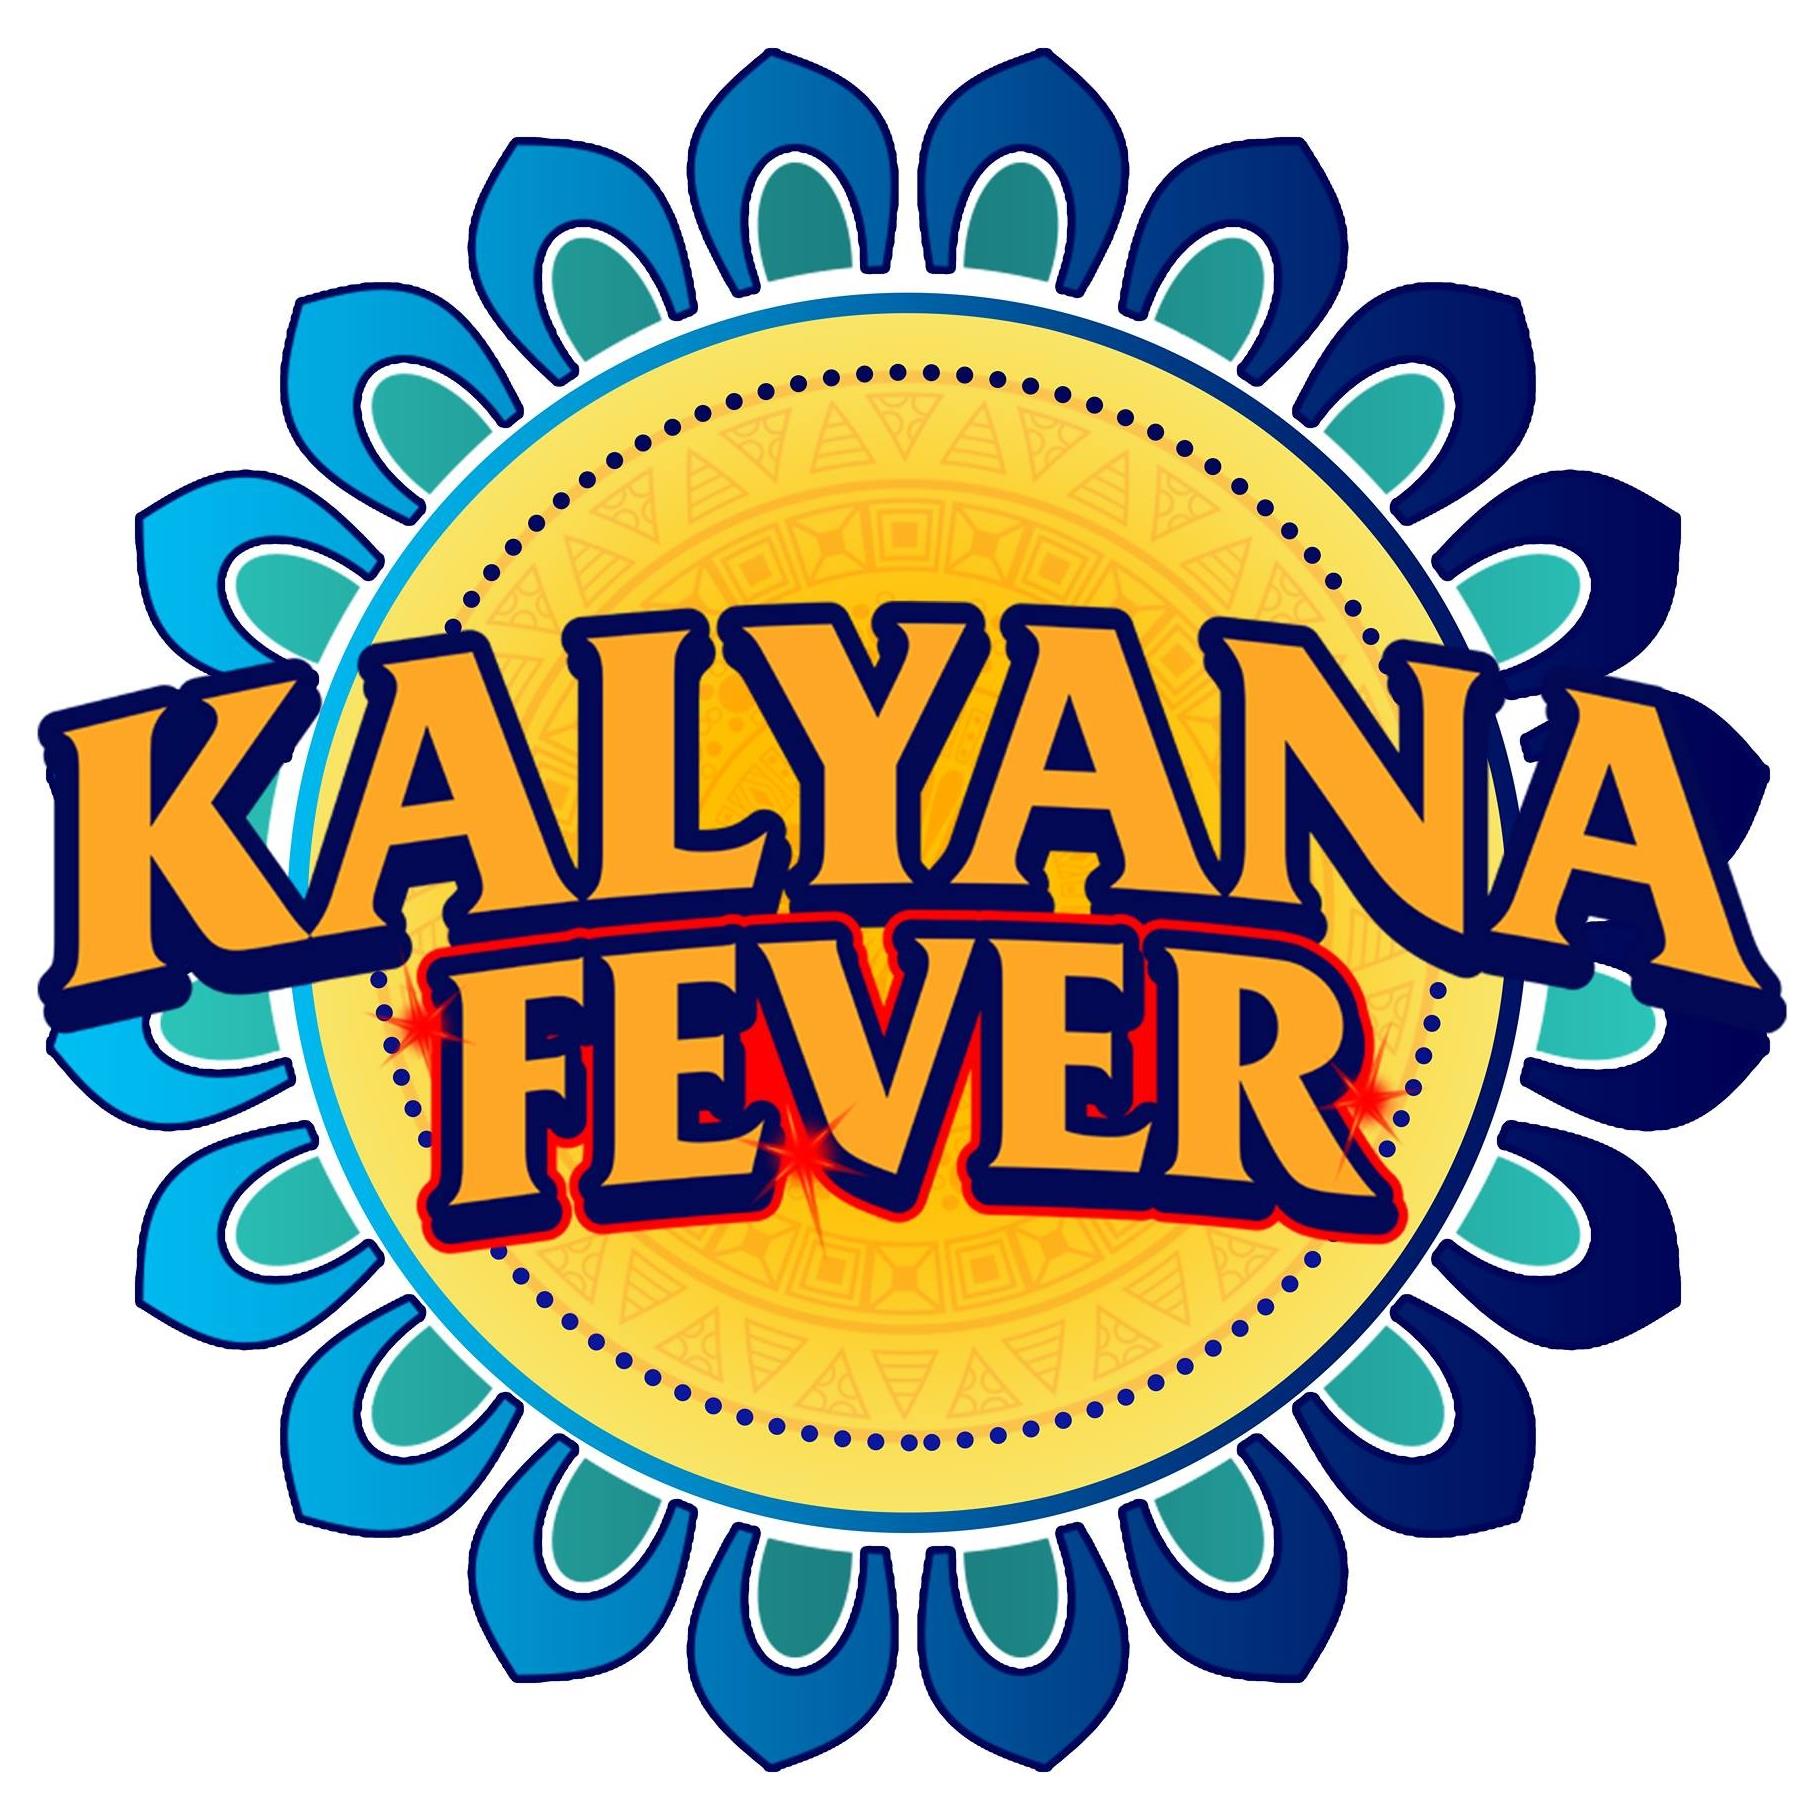 Kalyana Fever Gifts